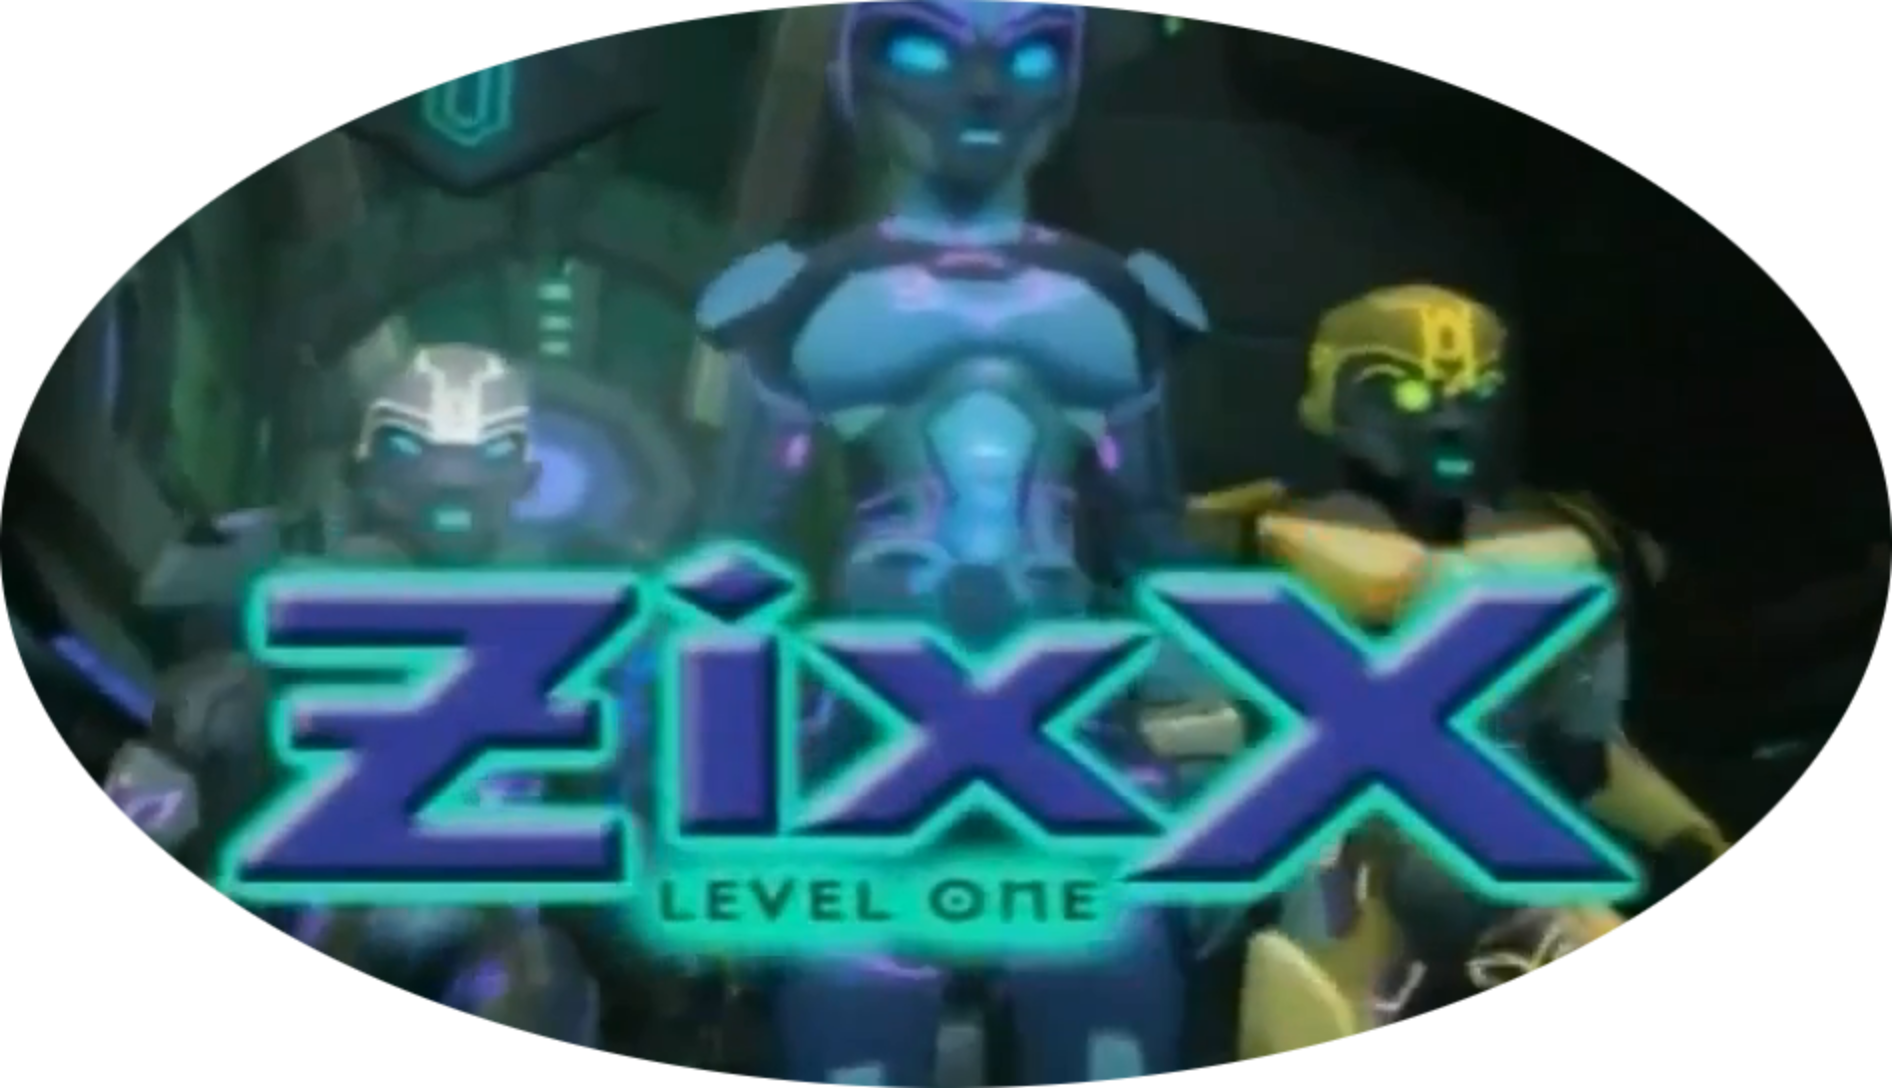 Zixx Level One (1 DVD Box Set)